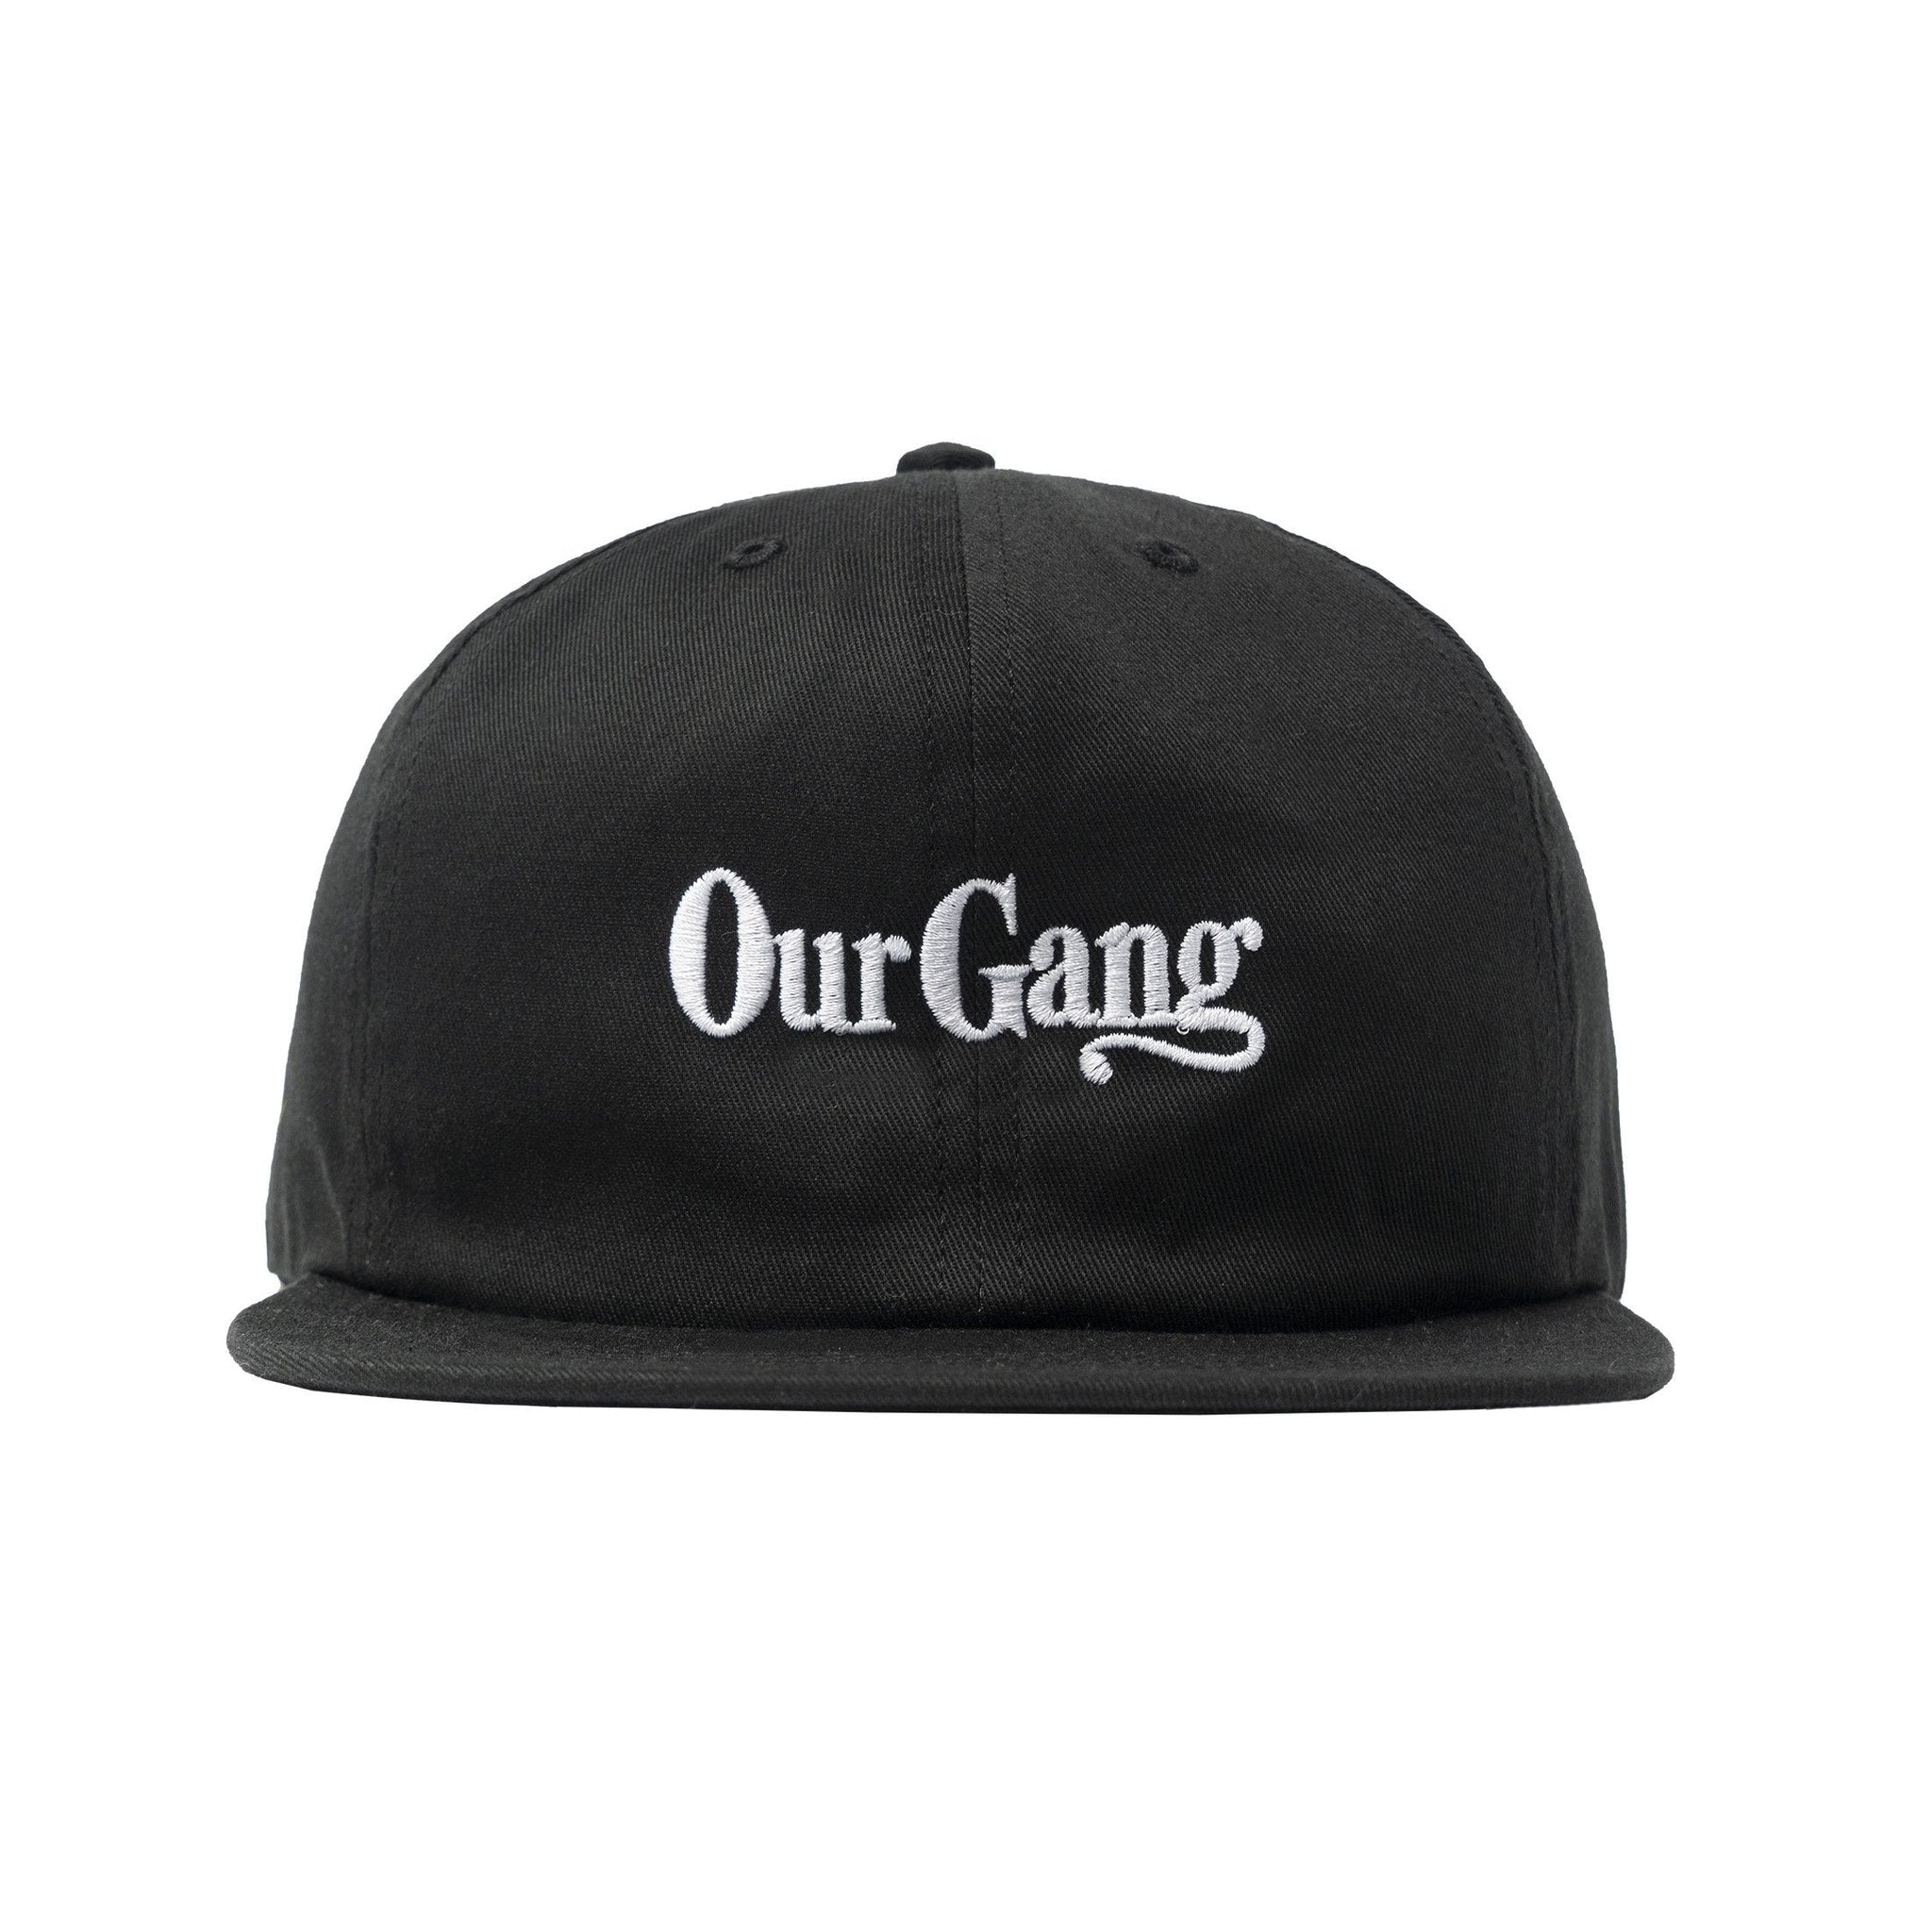 OUR GANG CAP - Black